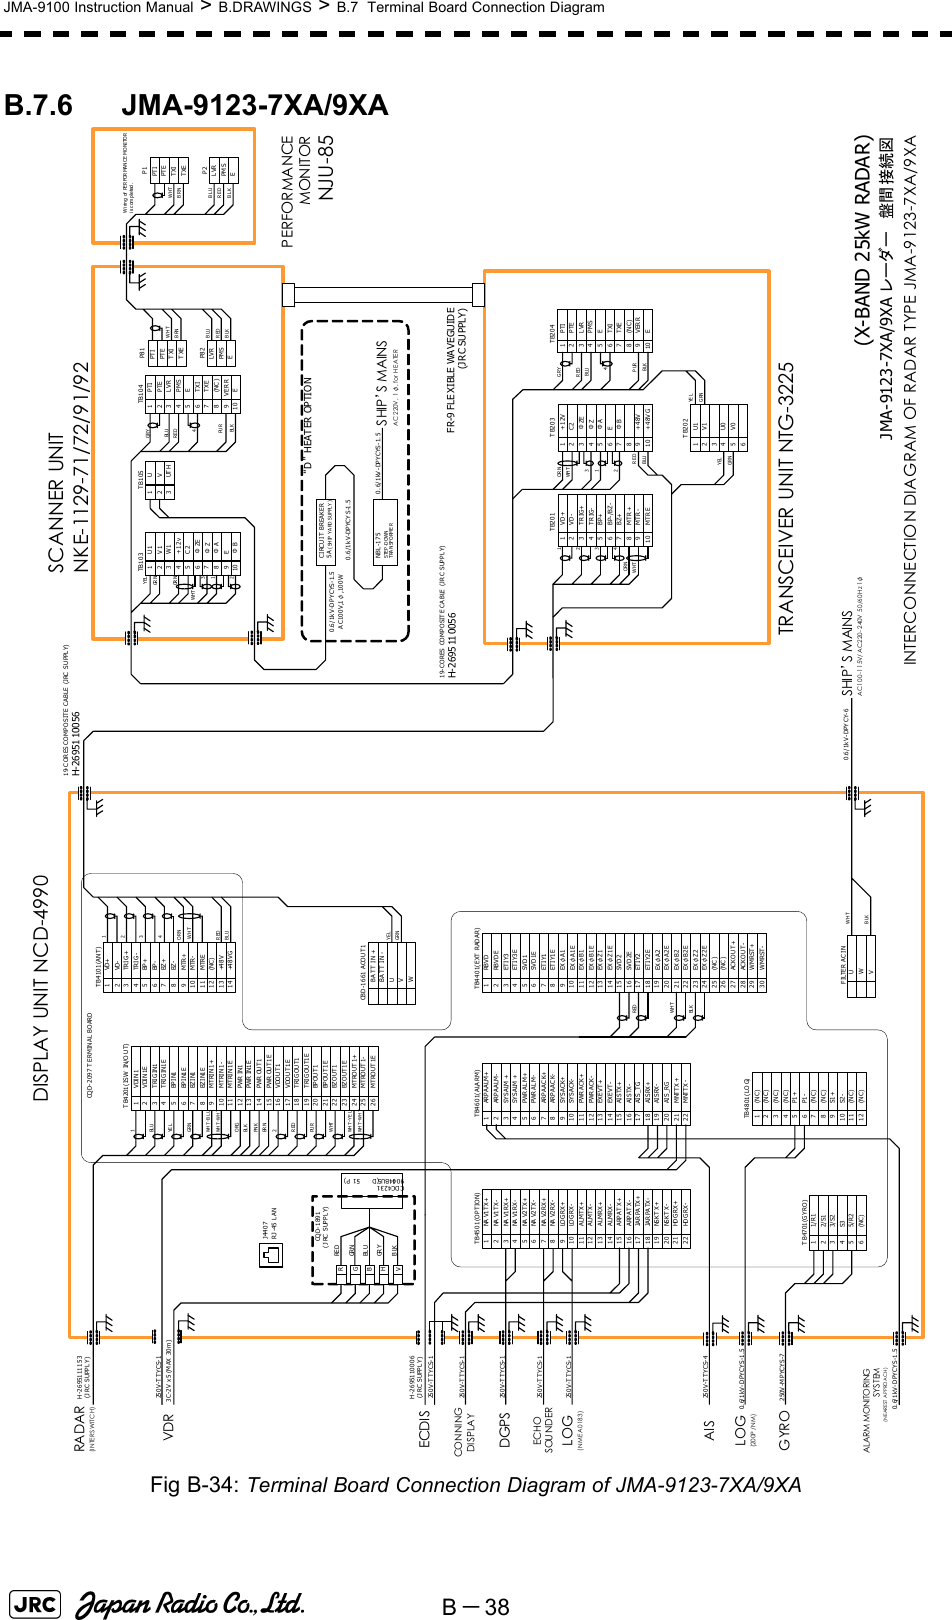 B－38JMA-9100 Instruction Manual &gt; B.DRAWINGS &gt; B.7  Terminal Board Connection DiagramB.7.6 JMA-9123-7XA/9XAFig B-34: Terminal Board Connection Diagram of JMA-9123-7XA/9XA 1VD+2VD-3TRIG+4TRIG-5BP+6BP-7BZ+8BZ-9MTR+10 MTR-11 MTRE12 (NC)13 +4 8 V14 +4 8 V GTB4101(ANT)1NA V 1 T X+2NA V 1 T X-3NA V 1 RX +4NA V 1 RX -5NA V 2 T X+6NA V 2 T X-7NA V 2 RX +8NA V 2 RX -9LO G R X+10 LO G R X-11 ALMTX+12 ALMTX-13 ALMRX+14 ALMRX-15 ARPAT X+16 ARPAT X-17 JAR PA TX+18 JAR PA TX-19 NSKT X +20 NSKT X -21 HD G RX +22 HD G RX -TB4501(OPTION)1ARPAAL M+2ARPAAL M-3SYSALM +4SYSALM +5PWR ALM+6PWR ALM-7ARPAAC K+8ARPAAC K-9SYSACK+10 SYSACK-11 PWR ACK+12 PWR ACK-13 EXEVT+14 EXEVT-15 AISTX+16 AISTX-17 AIS_ TG18 AISRX+19 AISRX-20 AIS_ RG21 MNTTX +22 MNTTX -TB4601(ALA RM) TB4401(EXT RAD AR)1RBVD2RBVD E3ETIY34ETIY3E5SVD16SVD1E7ETIY18ETIY1E9EXφA110 EXφA1E11 EXφB112 EXφB1E13 EXφZ114 EXφZ1E1516171819202122232425 (NC )26 (NC )27 ACKO U T+28 ACKO U T-29 WMRST+30 WMRST-SVD2SVD2EETIY2ETIY2EEXφA2EXφA2EEXφB2EXφB2EEXφZ2EXφZ2E1(NC)2345P1+6P1-789S1+10 S2-1112TB4801(LOG)(NC)(NC)(NC)(NC)(NC)(NC)(NC)UWVFILTER ACINCDC-1324J4409(DSUB-15P)RCQD-1891(JRC SUPPL Y)GBHVREDGRNBLUGR YBLK11/R122/S133/S24S355/R26(NC)TB4701(GYRO)PTIPTETXITXELVRPMSEP82P81PTIPTETXITXELVRPMSEP2P1SCANNER UNITNKE-1129-71/72/91/92PERFORMANCEMONITORNJU-85DISPLAY UNIT NCD-4990BLU1YE LGRNWHT-B LUWHT-WH TORGBLKPN KBR N2REDPU RWHT-YELWHT-WH TH-2695111153(J RC SUPPLY)1VDIN12VDIN1 E3TRIGIN14TRIGIN1E5BPIN16BPIN1E7BZIN18BZIN1E9MTRIN1+10 MTRIN1-11 MTRIN1E12 PWR IN113 PWR IN1E14 PWR OU T115 PWR OU T1E16 VDOU T117 VDOU T1E18 TRIG OU T119 TRIG OU T1E20 BPOUT121 BPOUT1 E22 BZOUT123 BZOUT1E24 MTROUT 1+25 MTROUT 1-26 MTROUT 1ET B4201(ISW IN/OUT)RADAR(INTERS WITC H)WHTREDWH TBLKECDISH-2695110006(J RC SUPPLY)250V-T TYCS-1250V-T TYCS-1CONNINGDISPLAYVDR3C-2V x 5 (MAX  30m )250V-T TYCS-1250V-T TYCS-1250V-T TYCS-1250V-T TYCS-1DGPSECHO SOUNDERLOG(NMEA0183)250V-T TYCS-4AIS0. 6/1k V-DPYCYS-1. 5250V -M PYCYS-7GYROLOG(200P /NM)0. 6/1k V-DPYCYS-1. 5ALARM MONITORI NGSYS T EM(NEAREST APPROACH)REDBLU3ORN WHTSHIP’S MAINSAC100-115V/ AC220-240V 50/60Hz 1φ(X-BAND 25kW RADAR)JMA-9123-7XA/9XA レーダー 盤間接続図INTERCONNECTION DIAGRAM OF RADAR TYPE JMA-9123-7XA/9XAWHTBLKWHTBRNBLUREDBLKWHTBRNBLUREDBLK19-C OR ES COMPOSITE CABLE (JRC SU PPLY)H-26 951 100 56CQD-2097 T ERMINAL  BOARD124YELGRN123UVUT HTB105CIRCU IT BREAKER5A ( SHIP  YA RD SU PPLY )0.6/1kV-DPYCYS-1.5A C100V,1φ,100WNBL - 1 7 5STEP -DO WN  TRA N S FO RME R0.6/1kV-DPYCY S-1. 50.6/1kV -DPYCYS-1.5SHIP’S MAINSAC 220V , 1φ,for HEATER“D” HEATER OPTIONPTIPTELVRPMS(NC )ETB104TXITXE12345678E910VER R1ΦB23C24ΦZE5U16V17W18+12v9ΦZ10ΦAETB103123V145U06V0U1TB2021GR NYELFR-9  FLEXIBLE WAVEGUIDE(J RC SU PPLY )19-CORES COMPOSIT E CA BLE (JR C SUPPLY)H-2 695 11 005 61MTR E23BP+4BP-/BZ-5VD+6VD-7TR IG+8TR IG-9BZ+10MTR +MTR -TB201123ΦA4E5+12V6C27ΦZE8ΦZ9ΦB10+48V+48V GTB20312345678910TB204PTIPTELVRPMS(NC)ETXITXEEVER R23GRNYE LREDBLU4ORNWHTORNWH T3124GRYREDBLUTRANSCEIVER UNIT NTG-32254GRYBLURED213WH TOR NYELGR NW iring  of  PERFOR MAN CE MONITORis completed .0.6/1kV-DPY CY-6PURBLKPU RBLKJ44 07RJ - 45 L ANUVWCBD -1661 ACO U T1BA TT IN -BA TT IN +